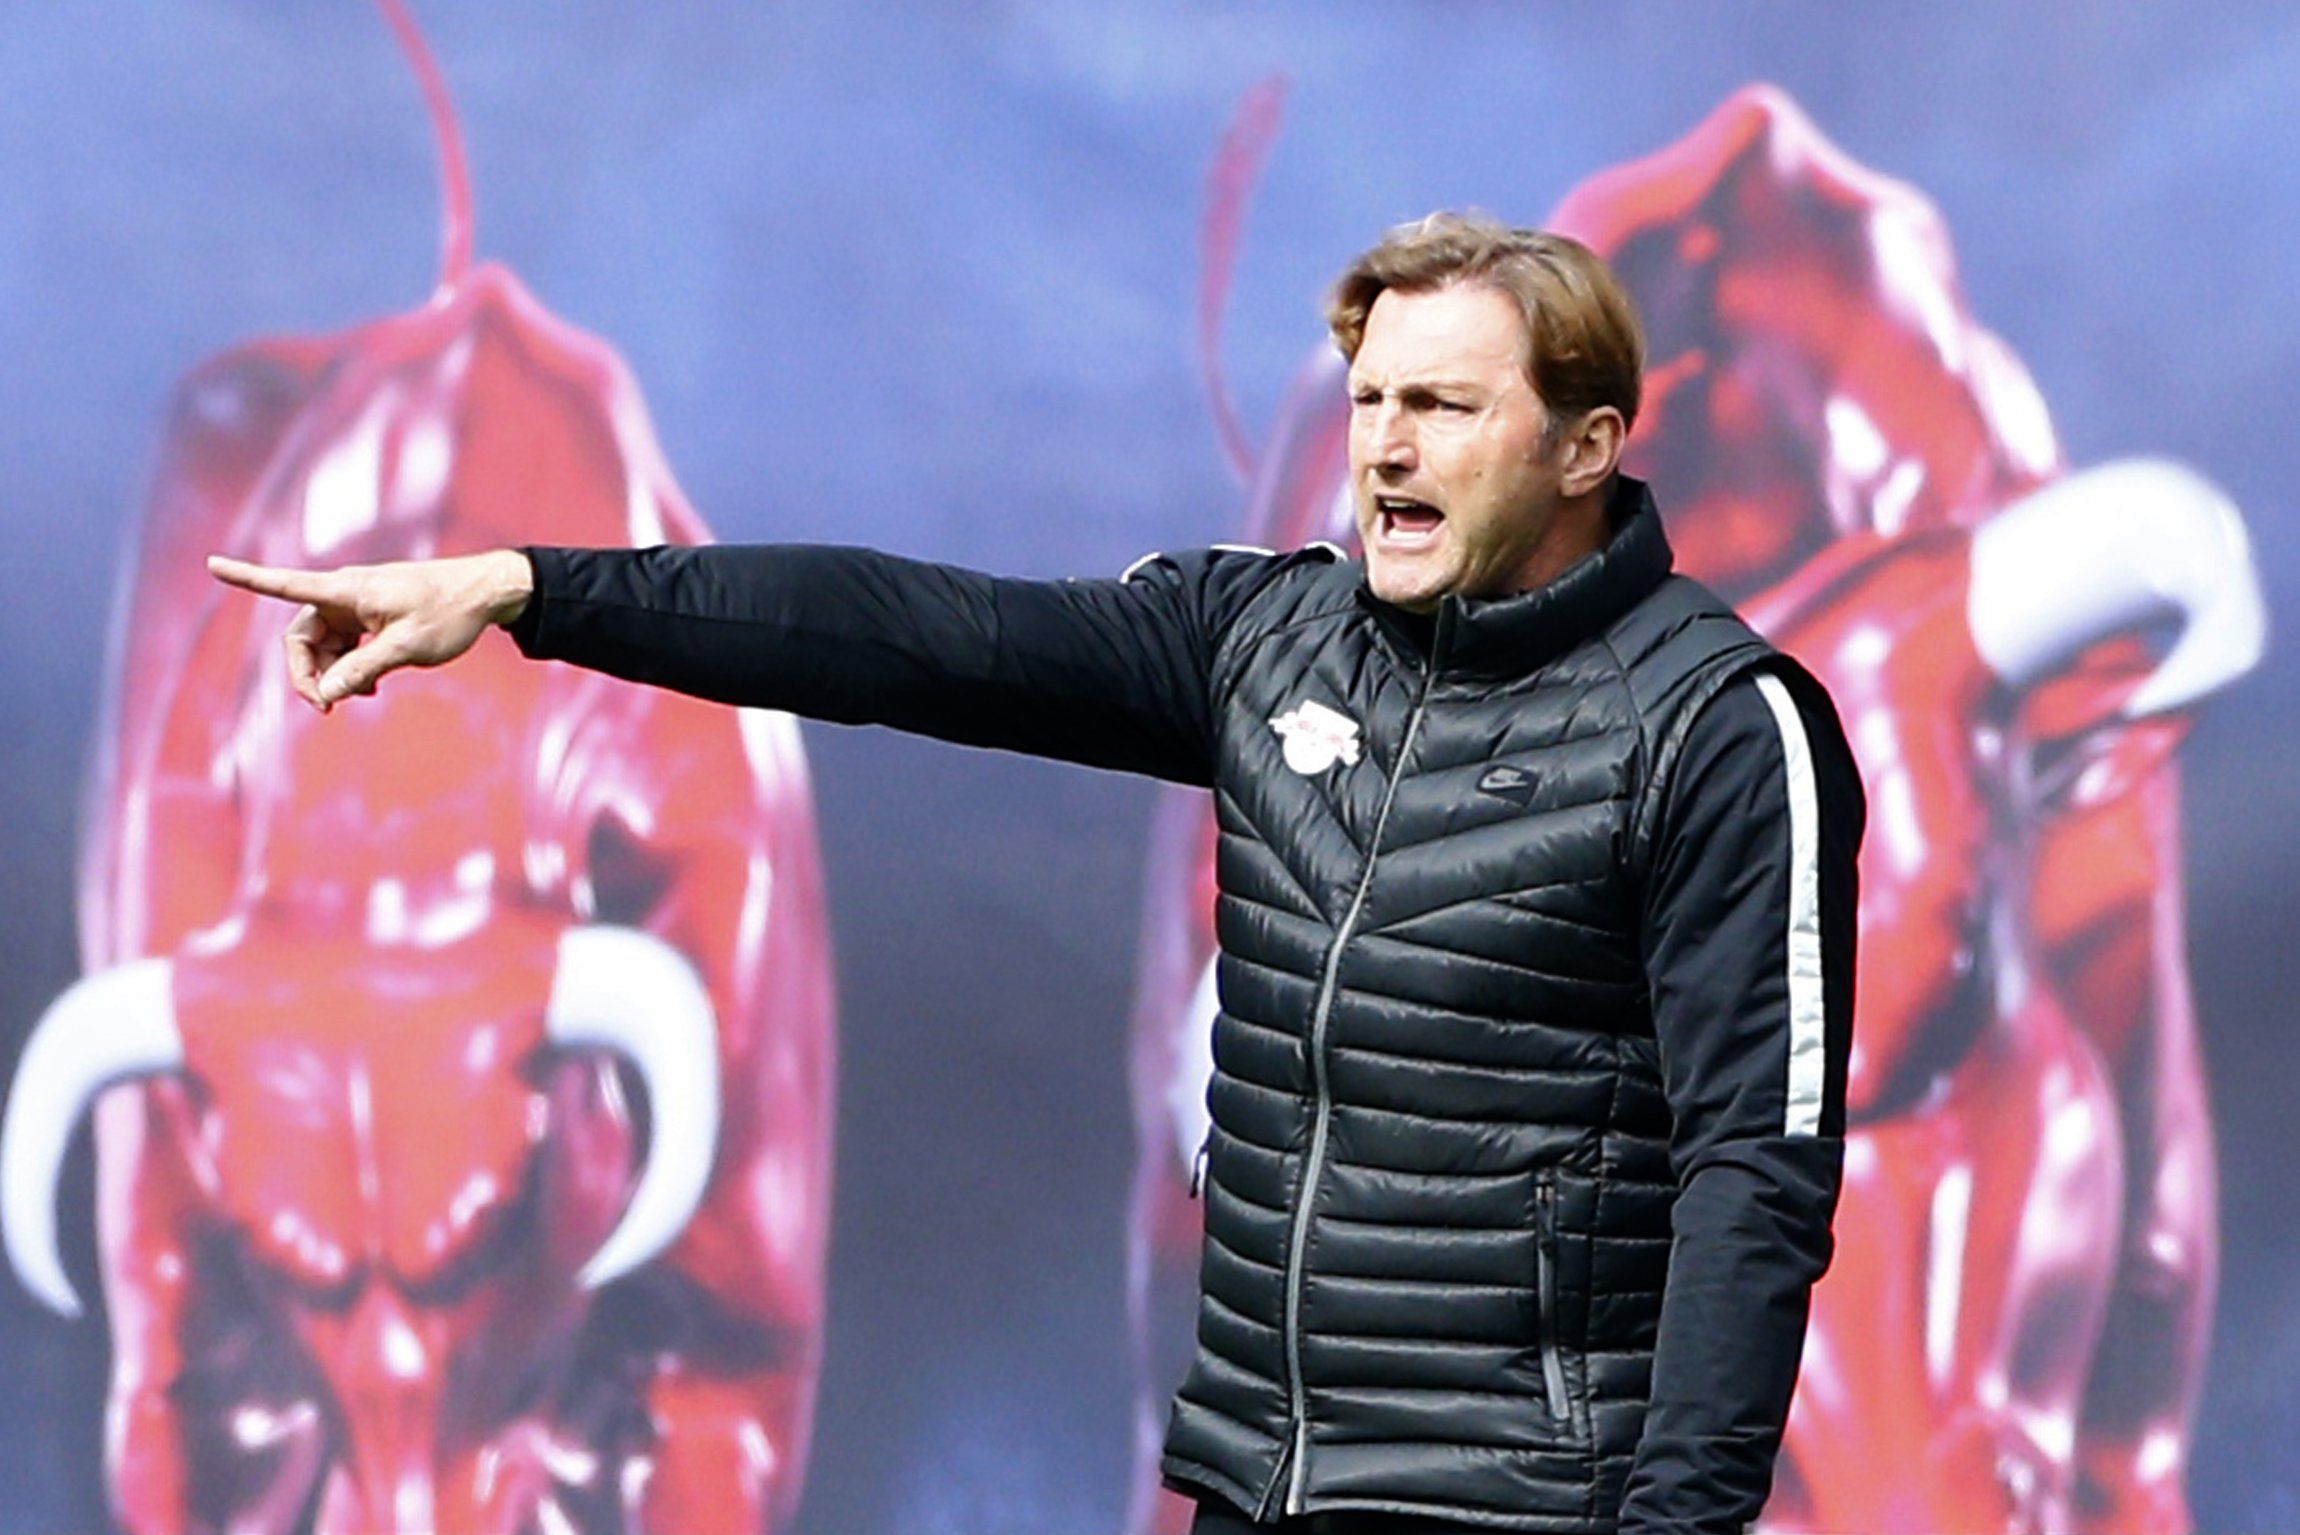 RB Leipzig manager Ralph Hasenhuttl gestures